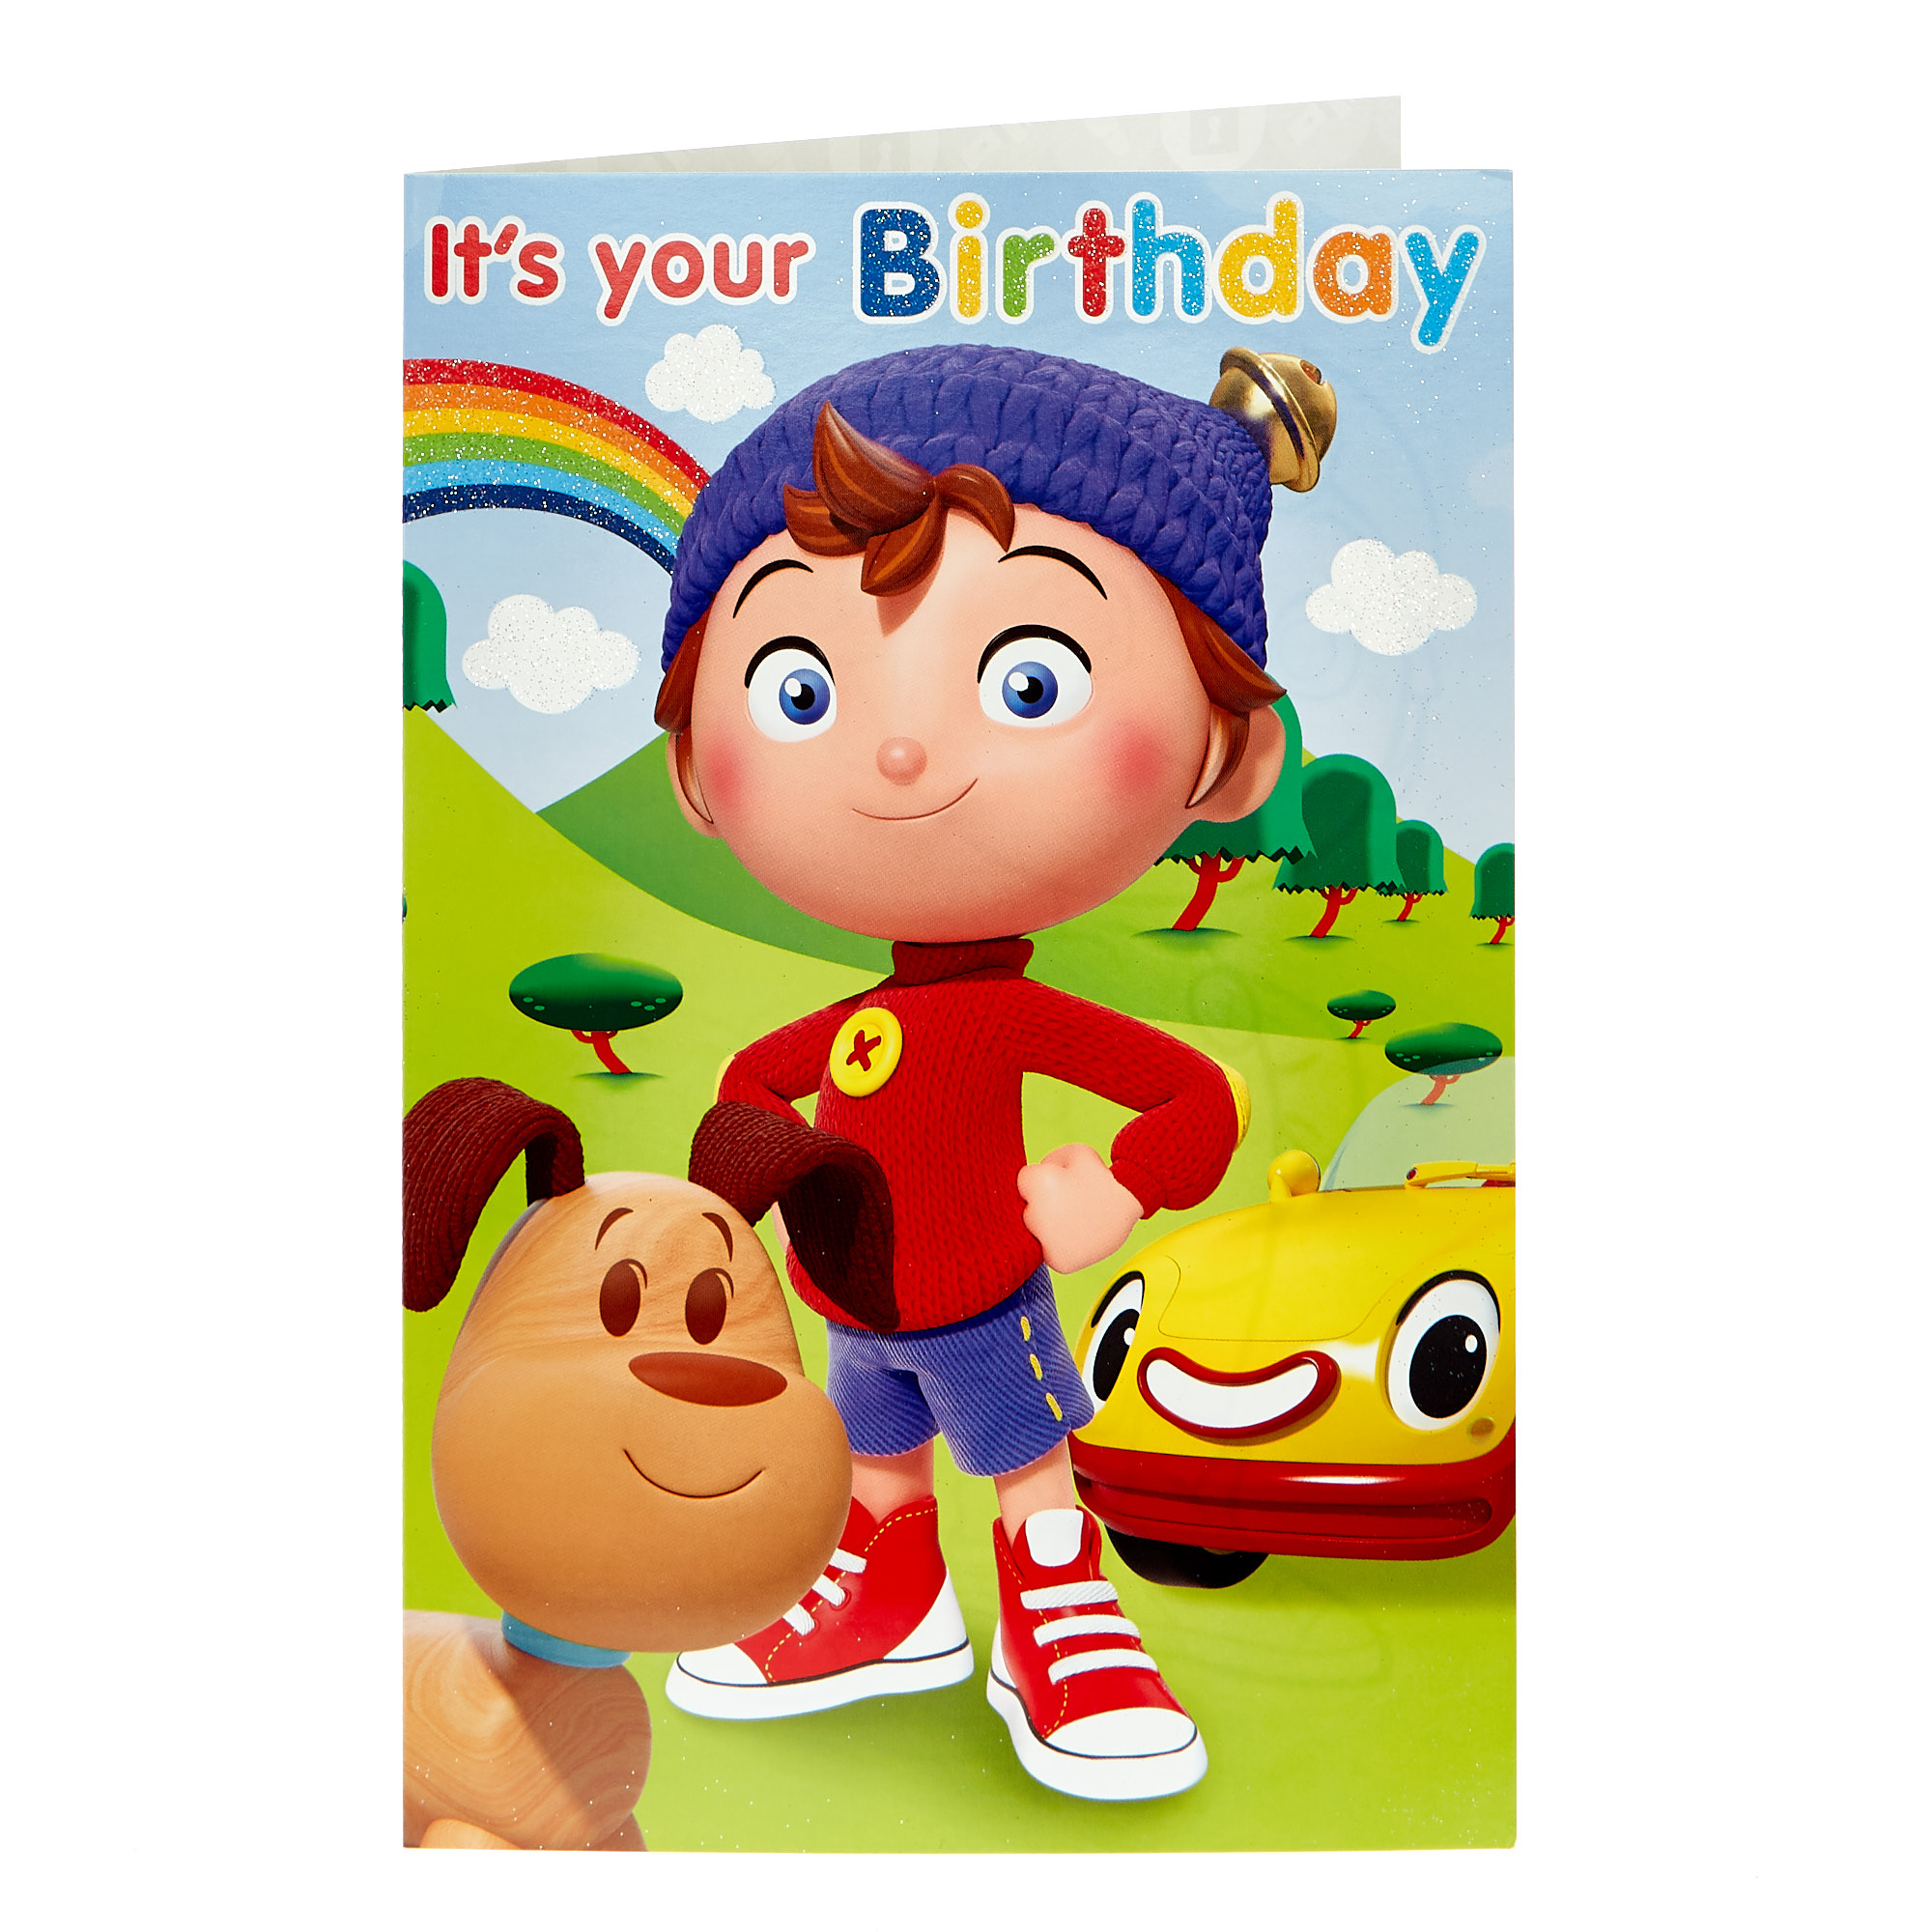 Noddy Birthday Card - Colour Me In!